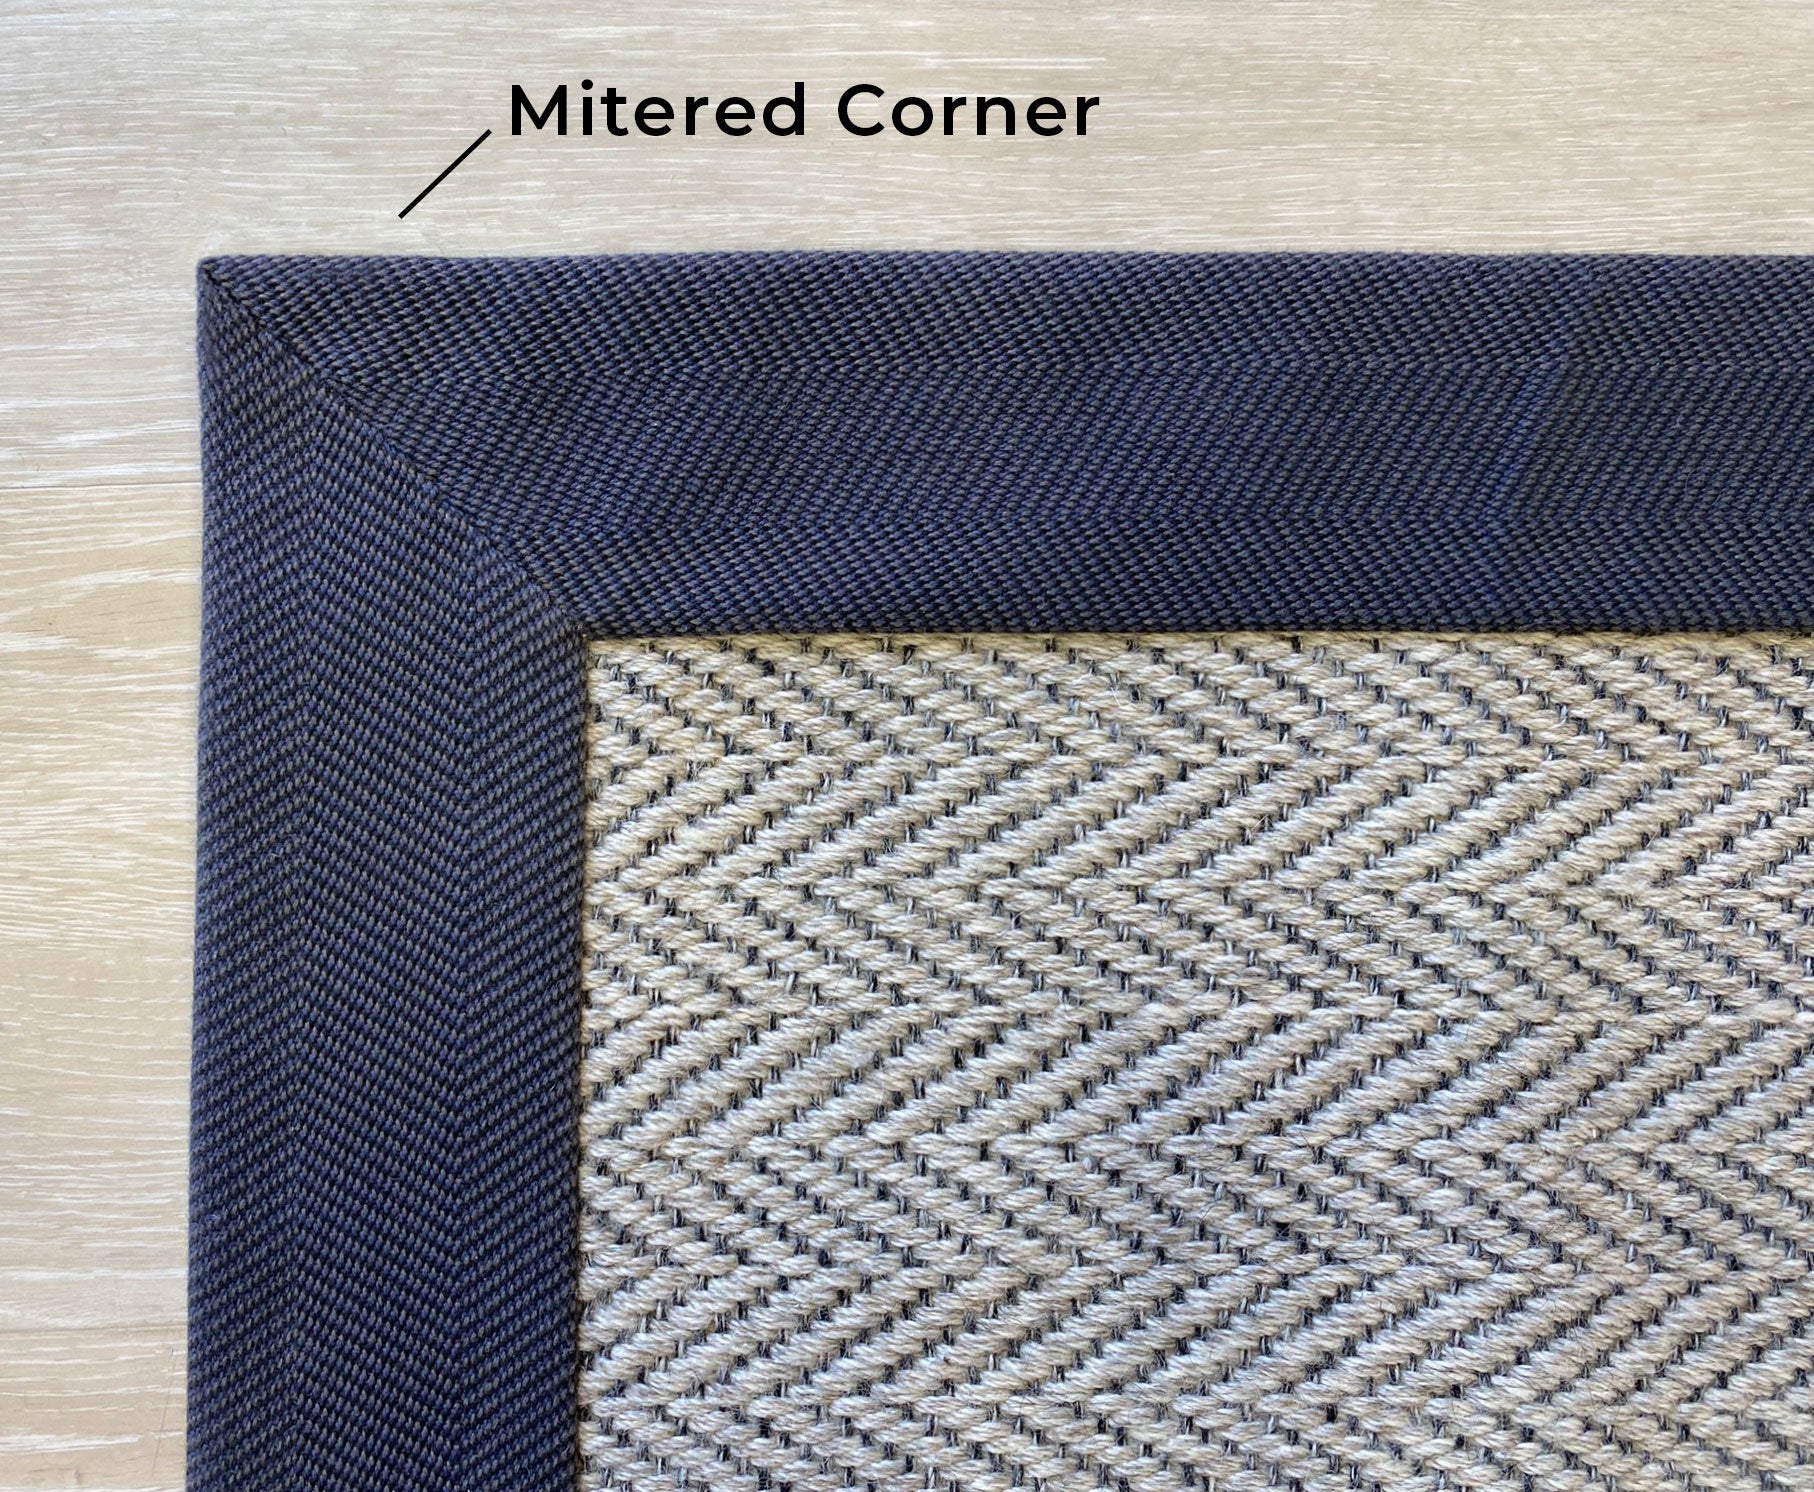 bound carpet with mitered corners navy blue